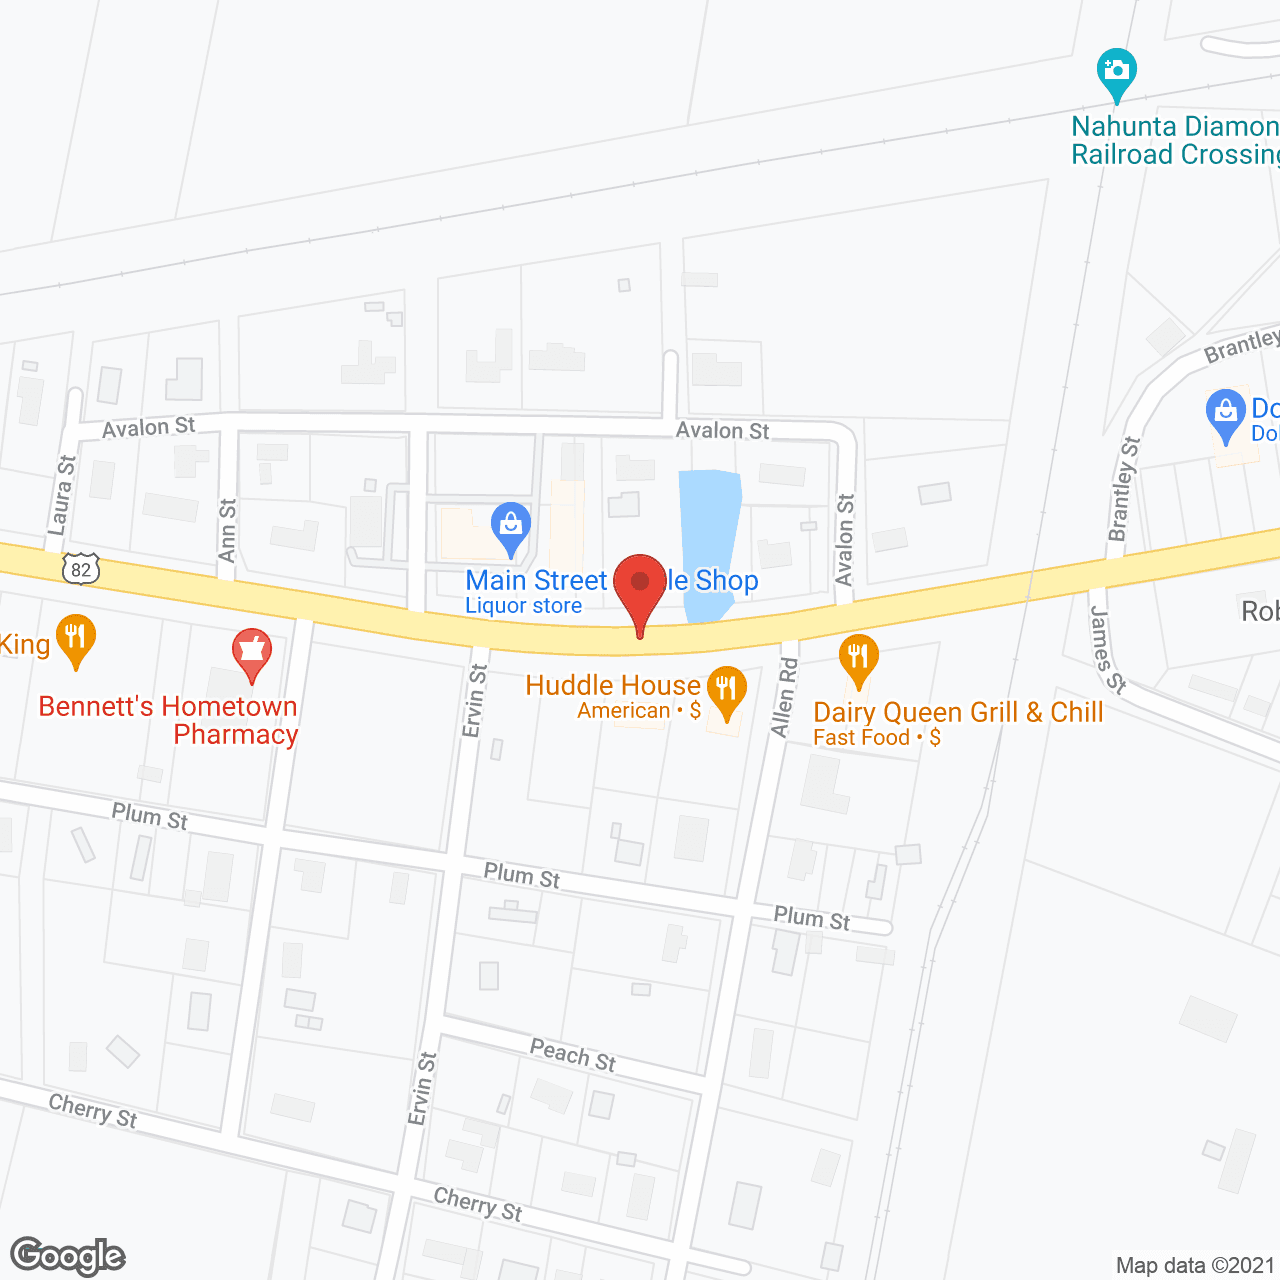 Bay View Nursing Home in google map